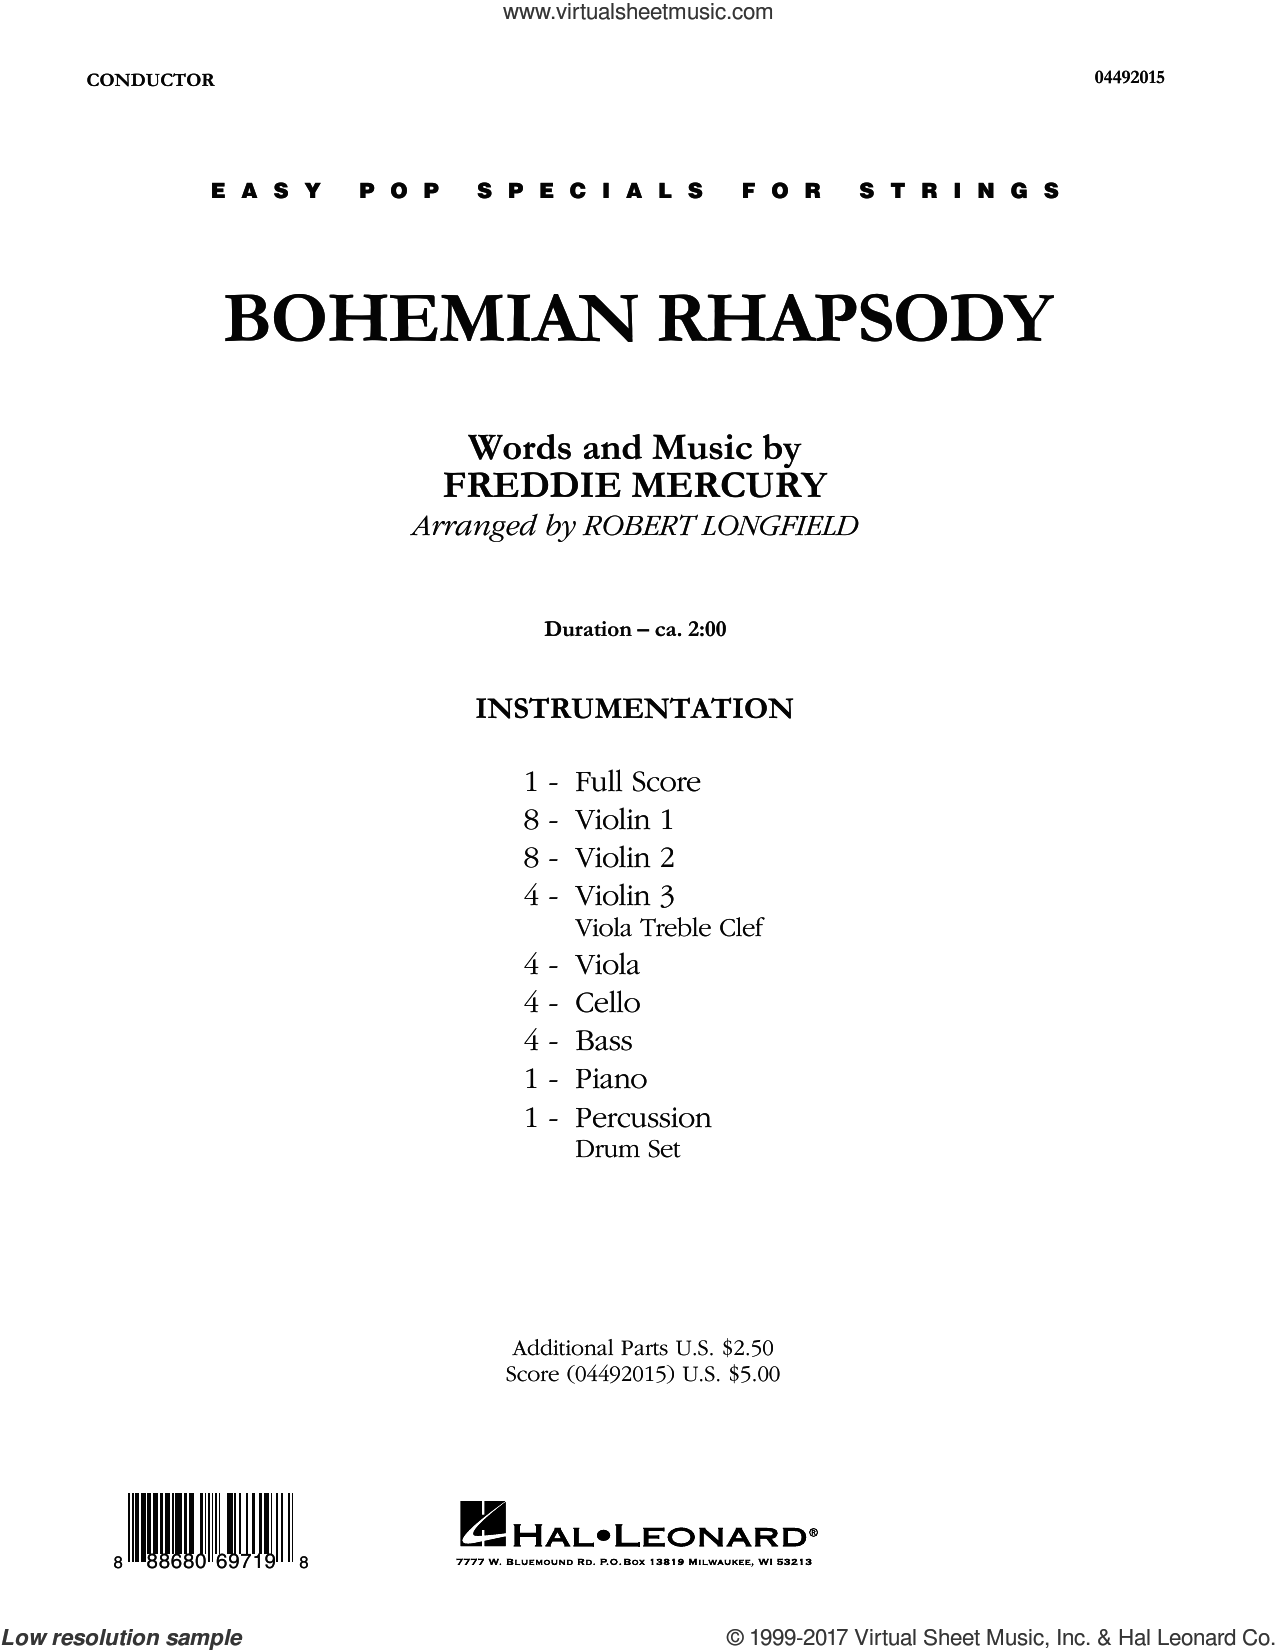 bohemian rhapsody notes for piano pdf